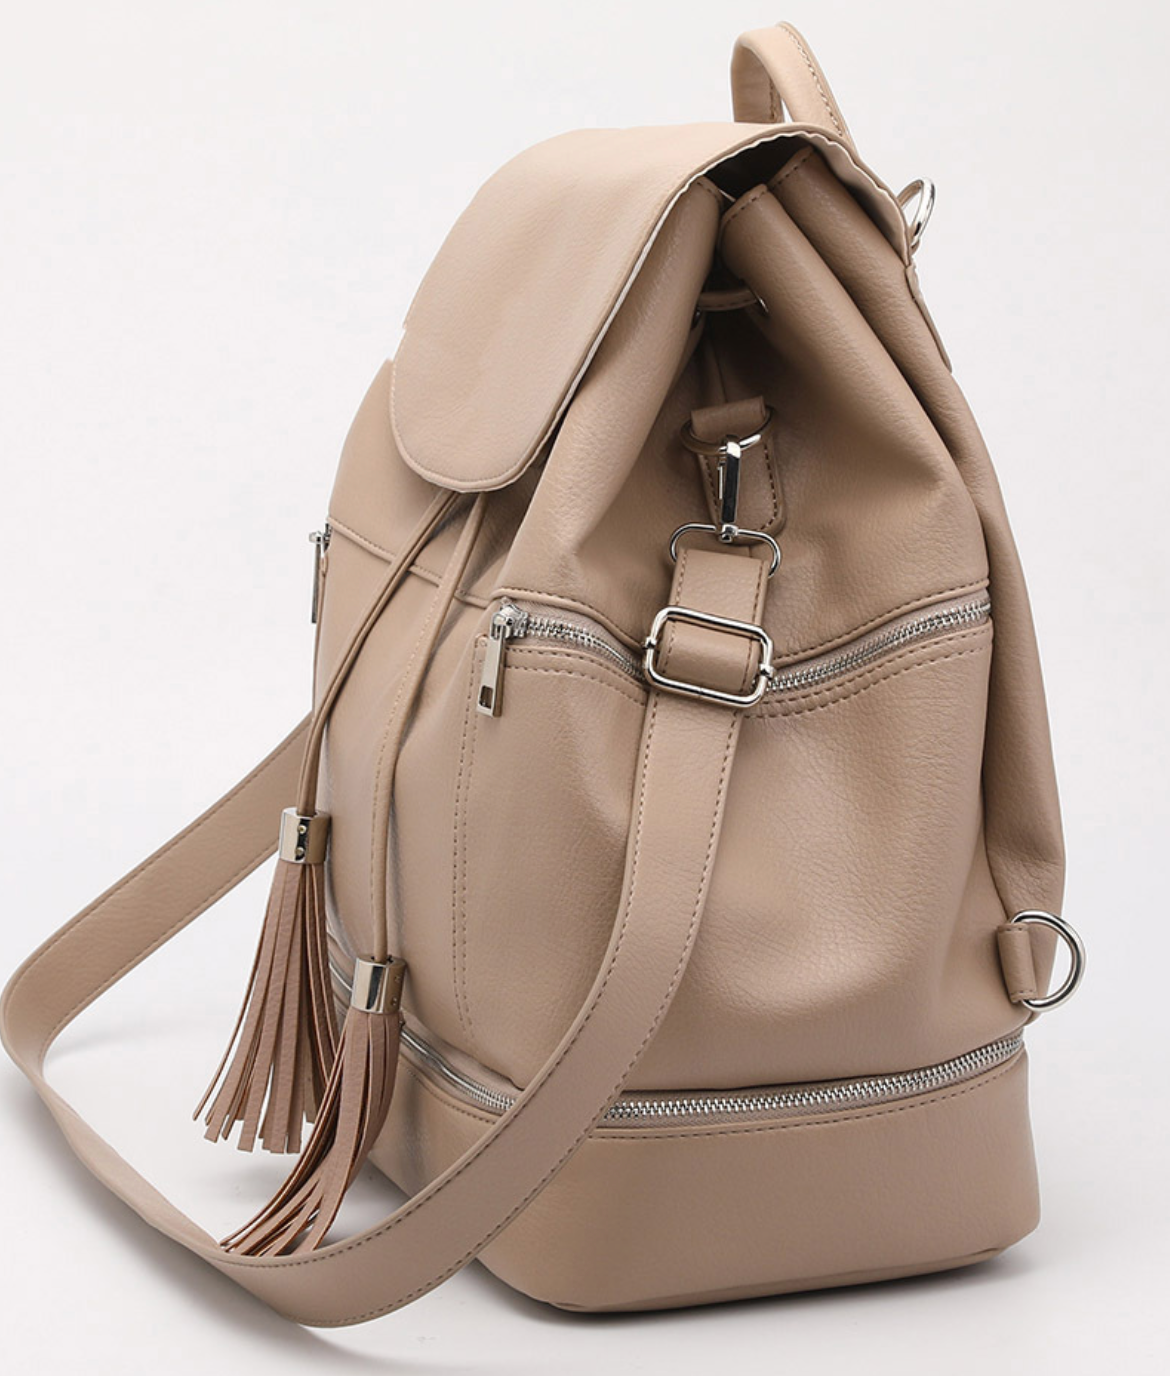 Maysan Tassel Backpack Change Bag